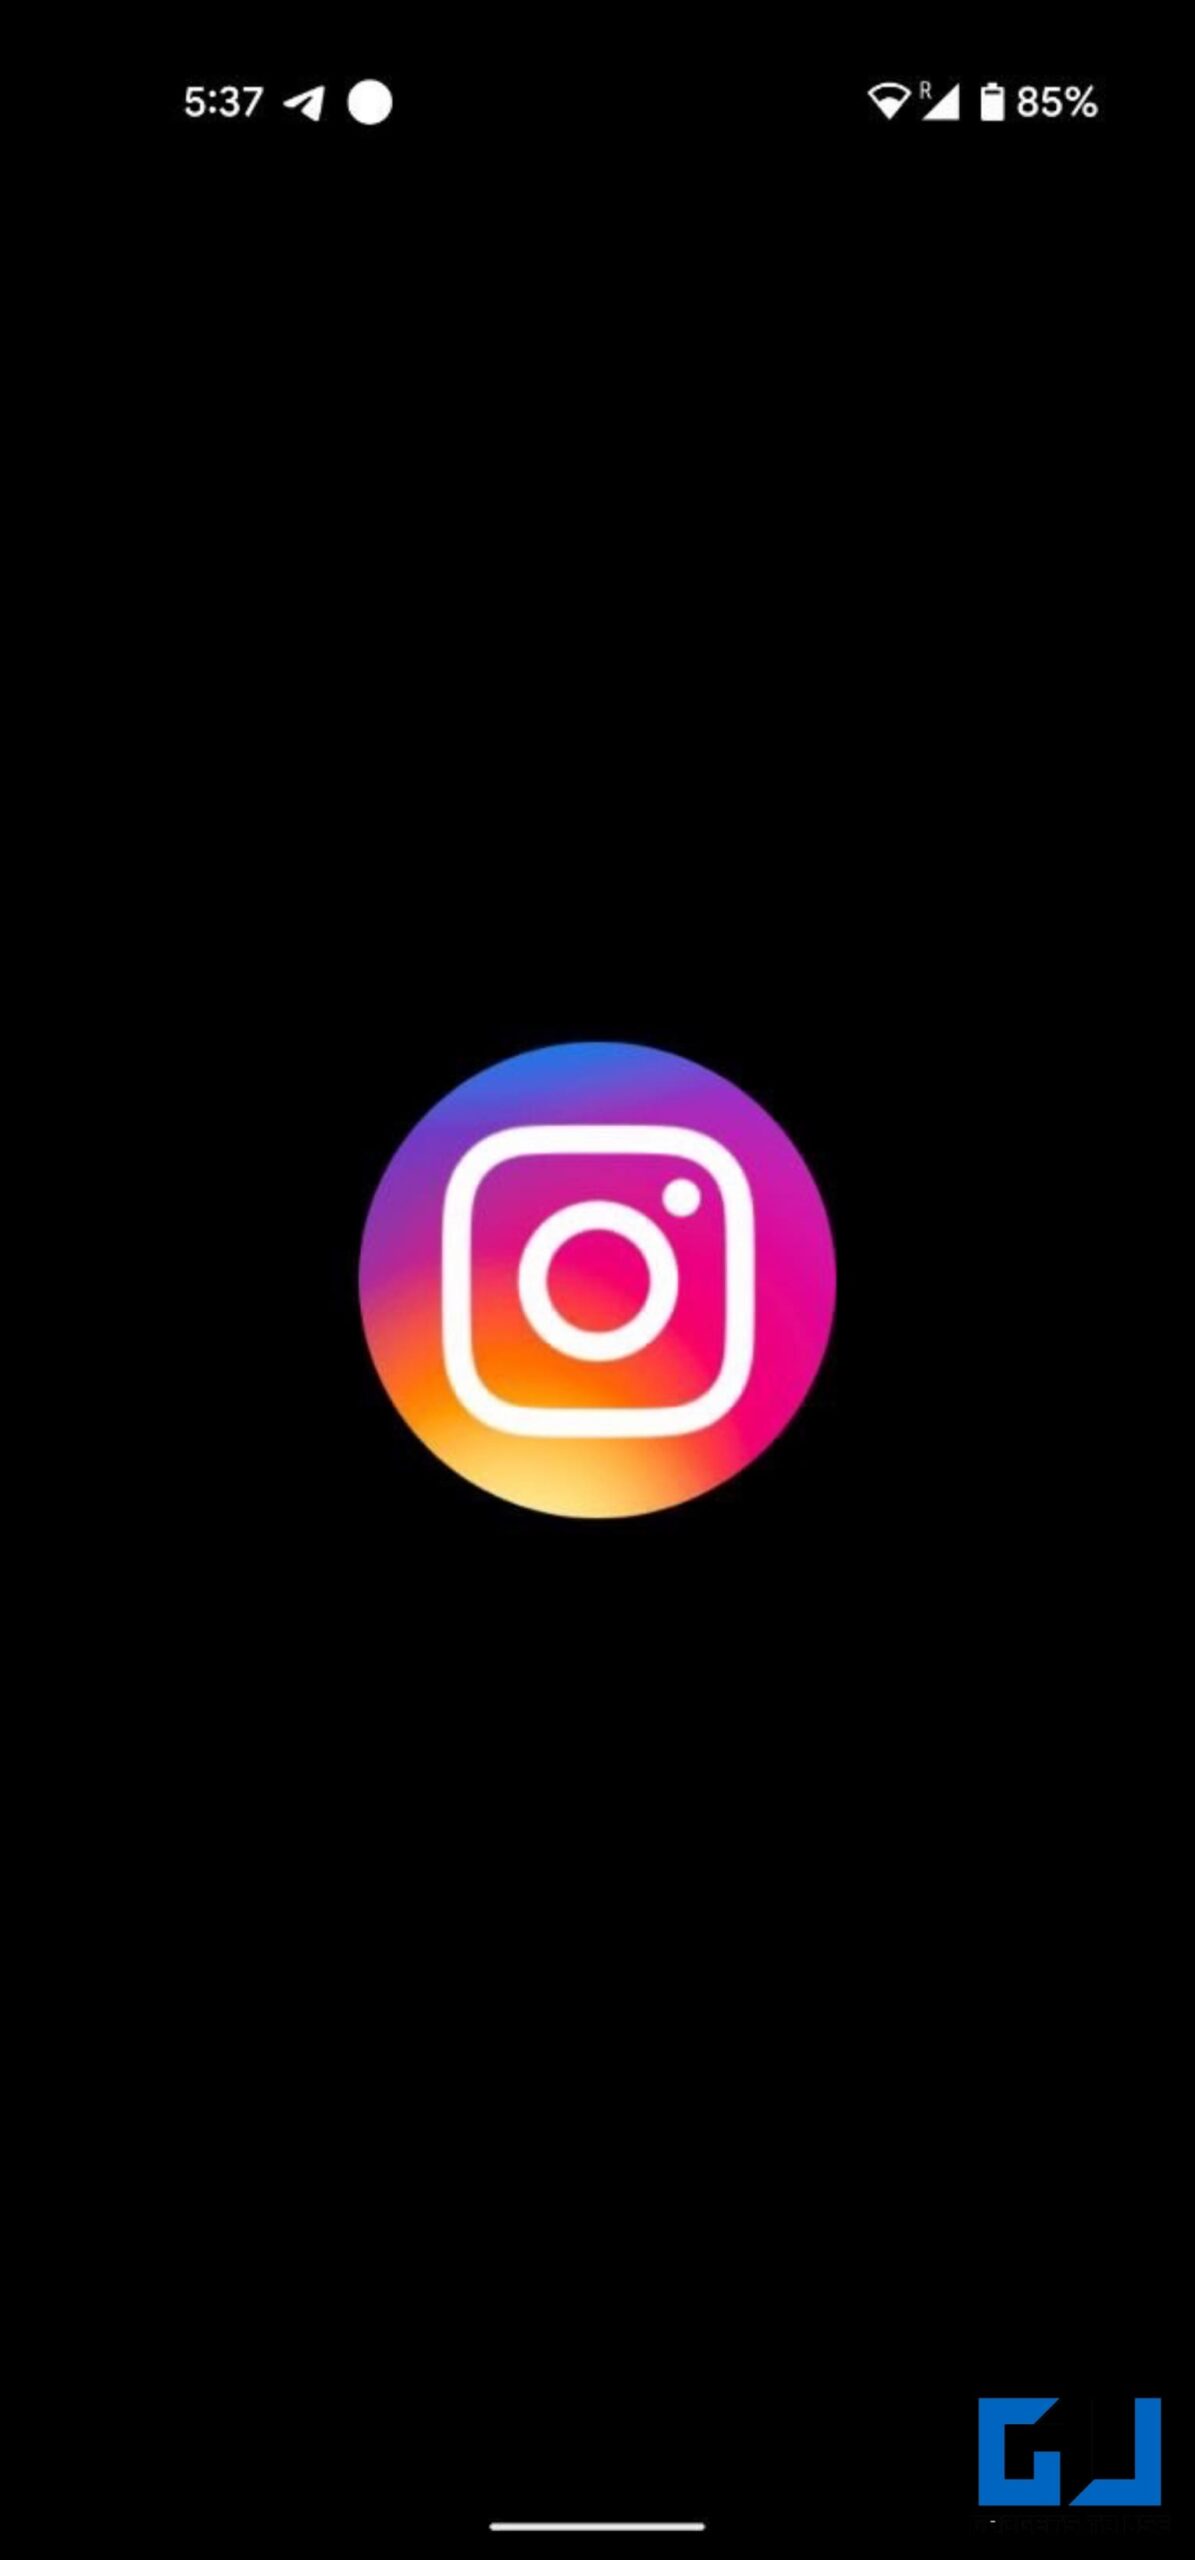 Instagram Dark Mode on Android